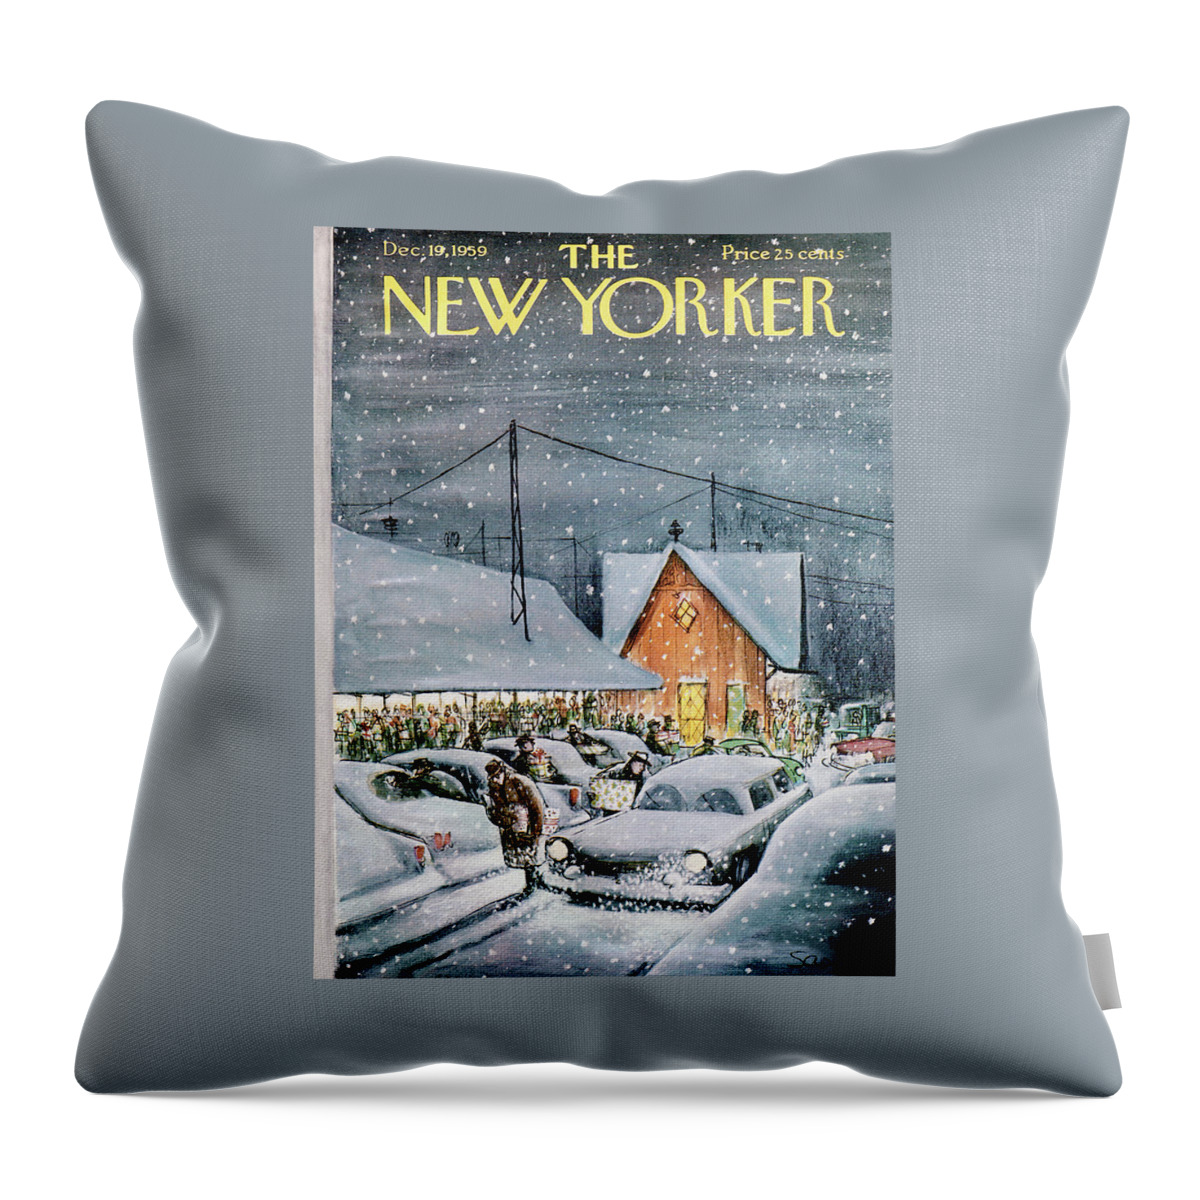 New Yorker December 19th, 1959 Throw Pillow